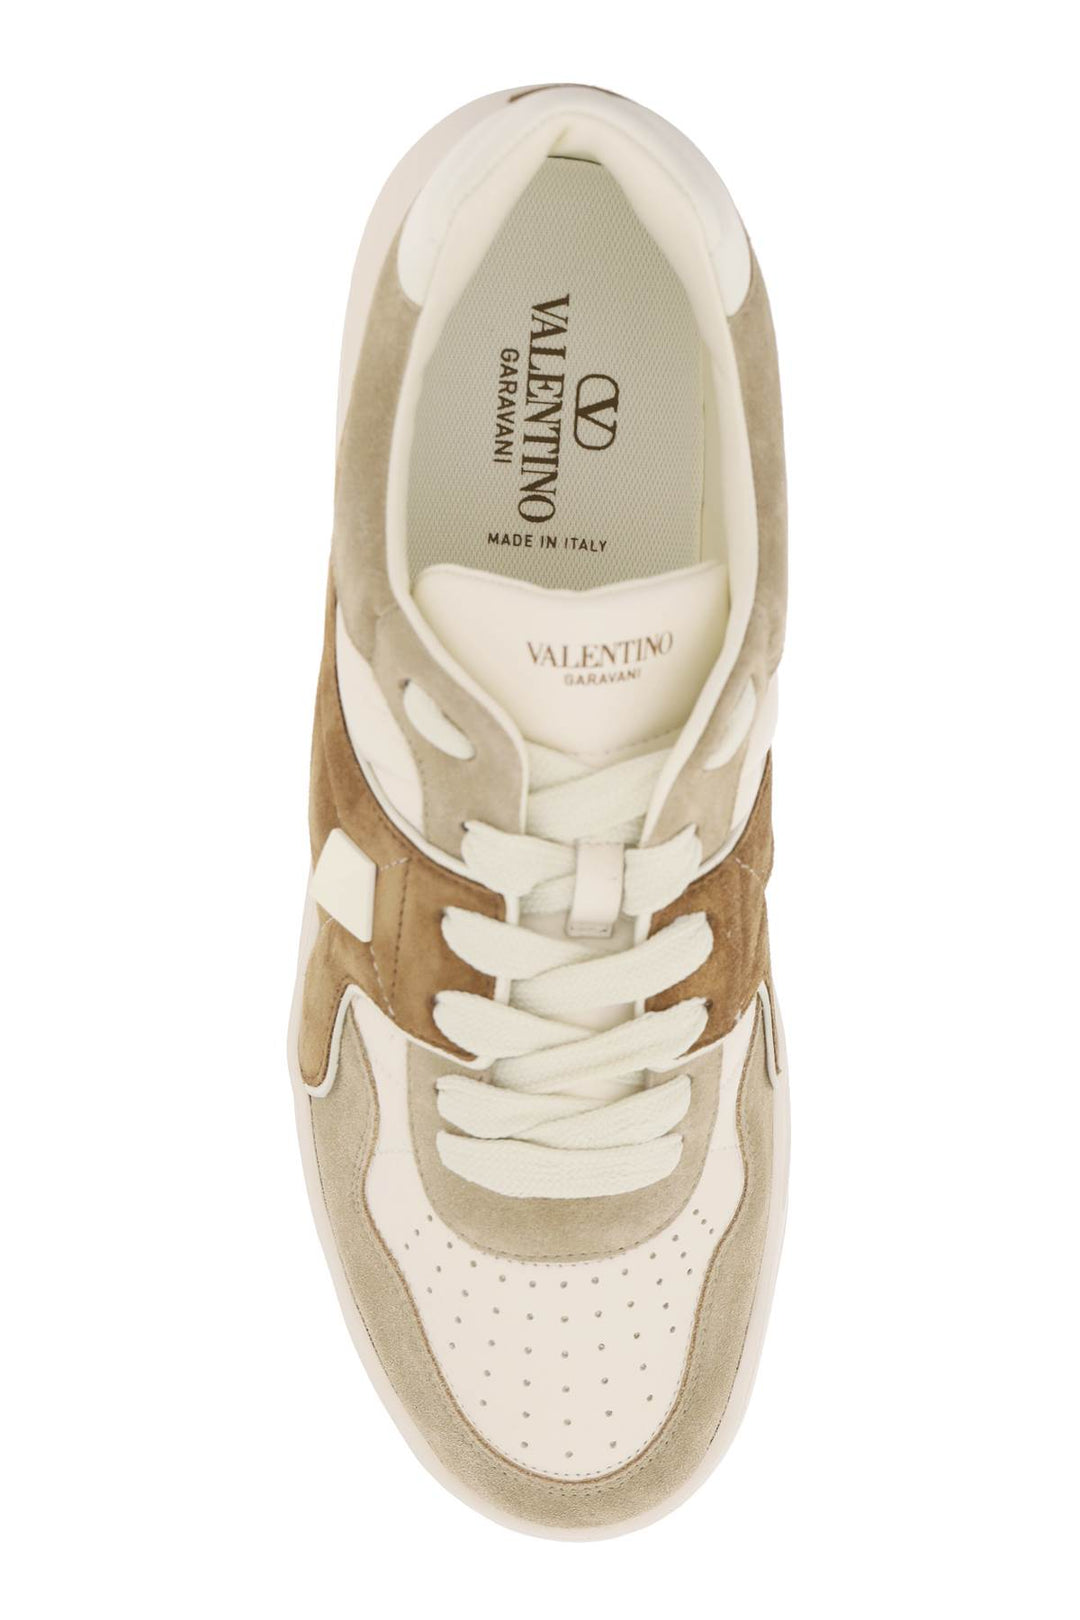 Valentino Garavani One Stud Crust And Nappa Leather Sneakers   White